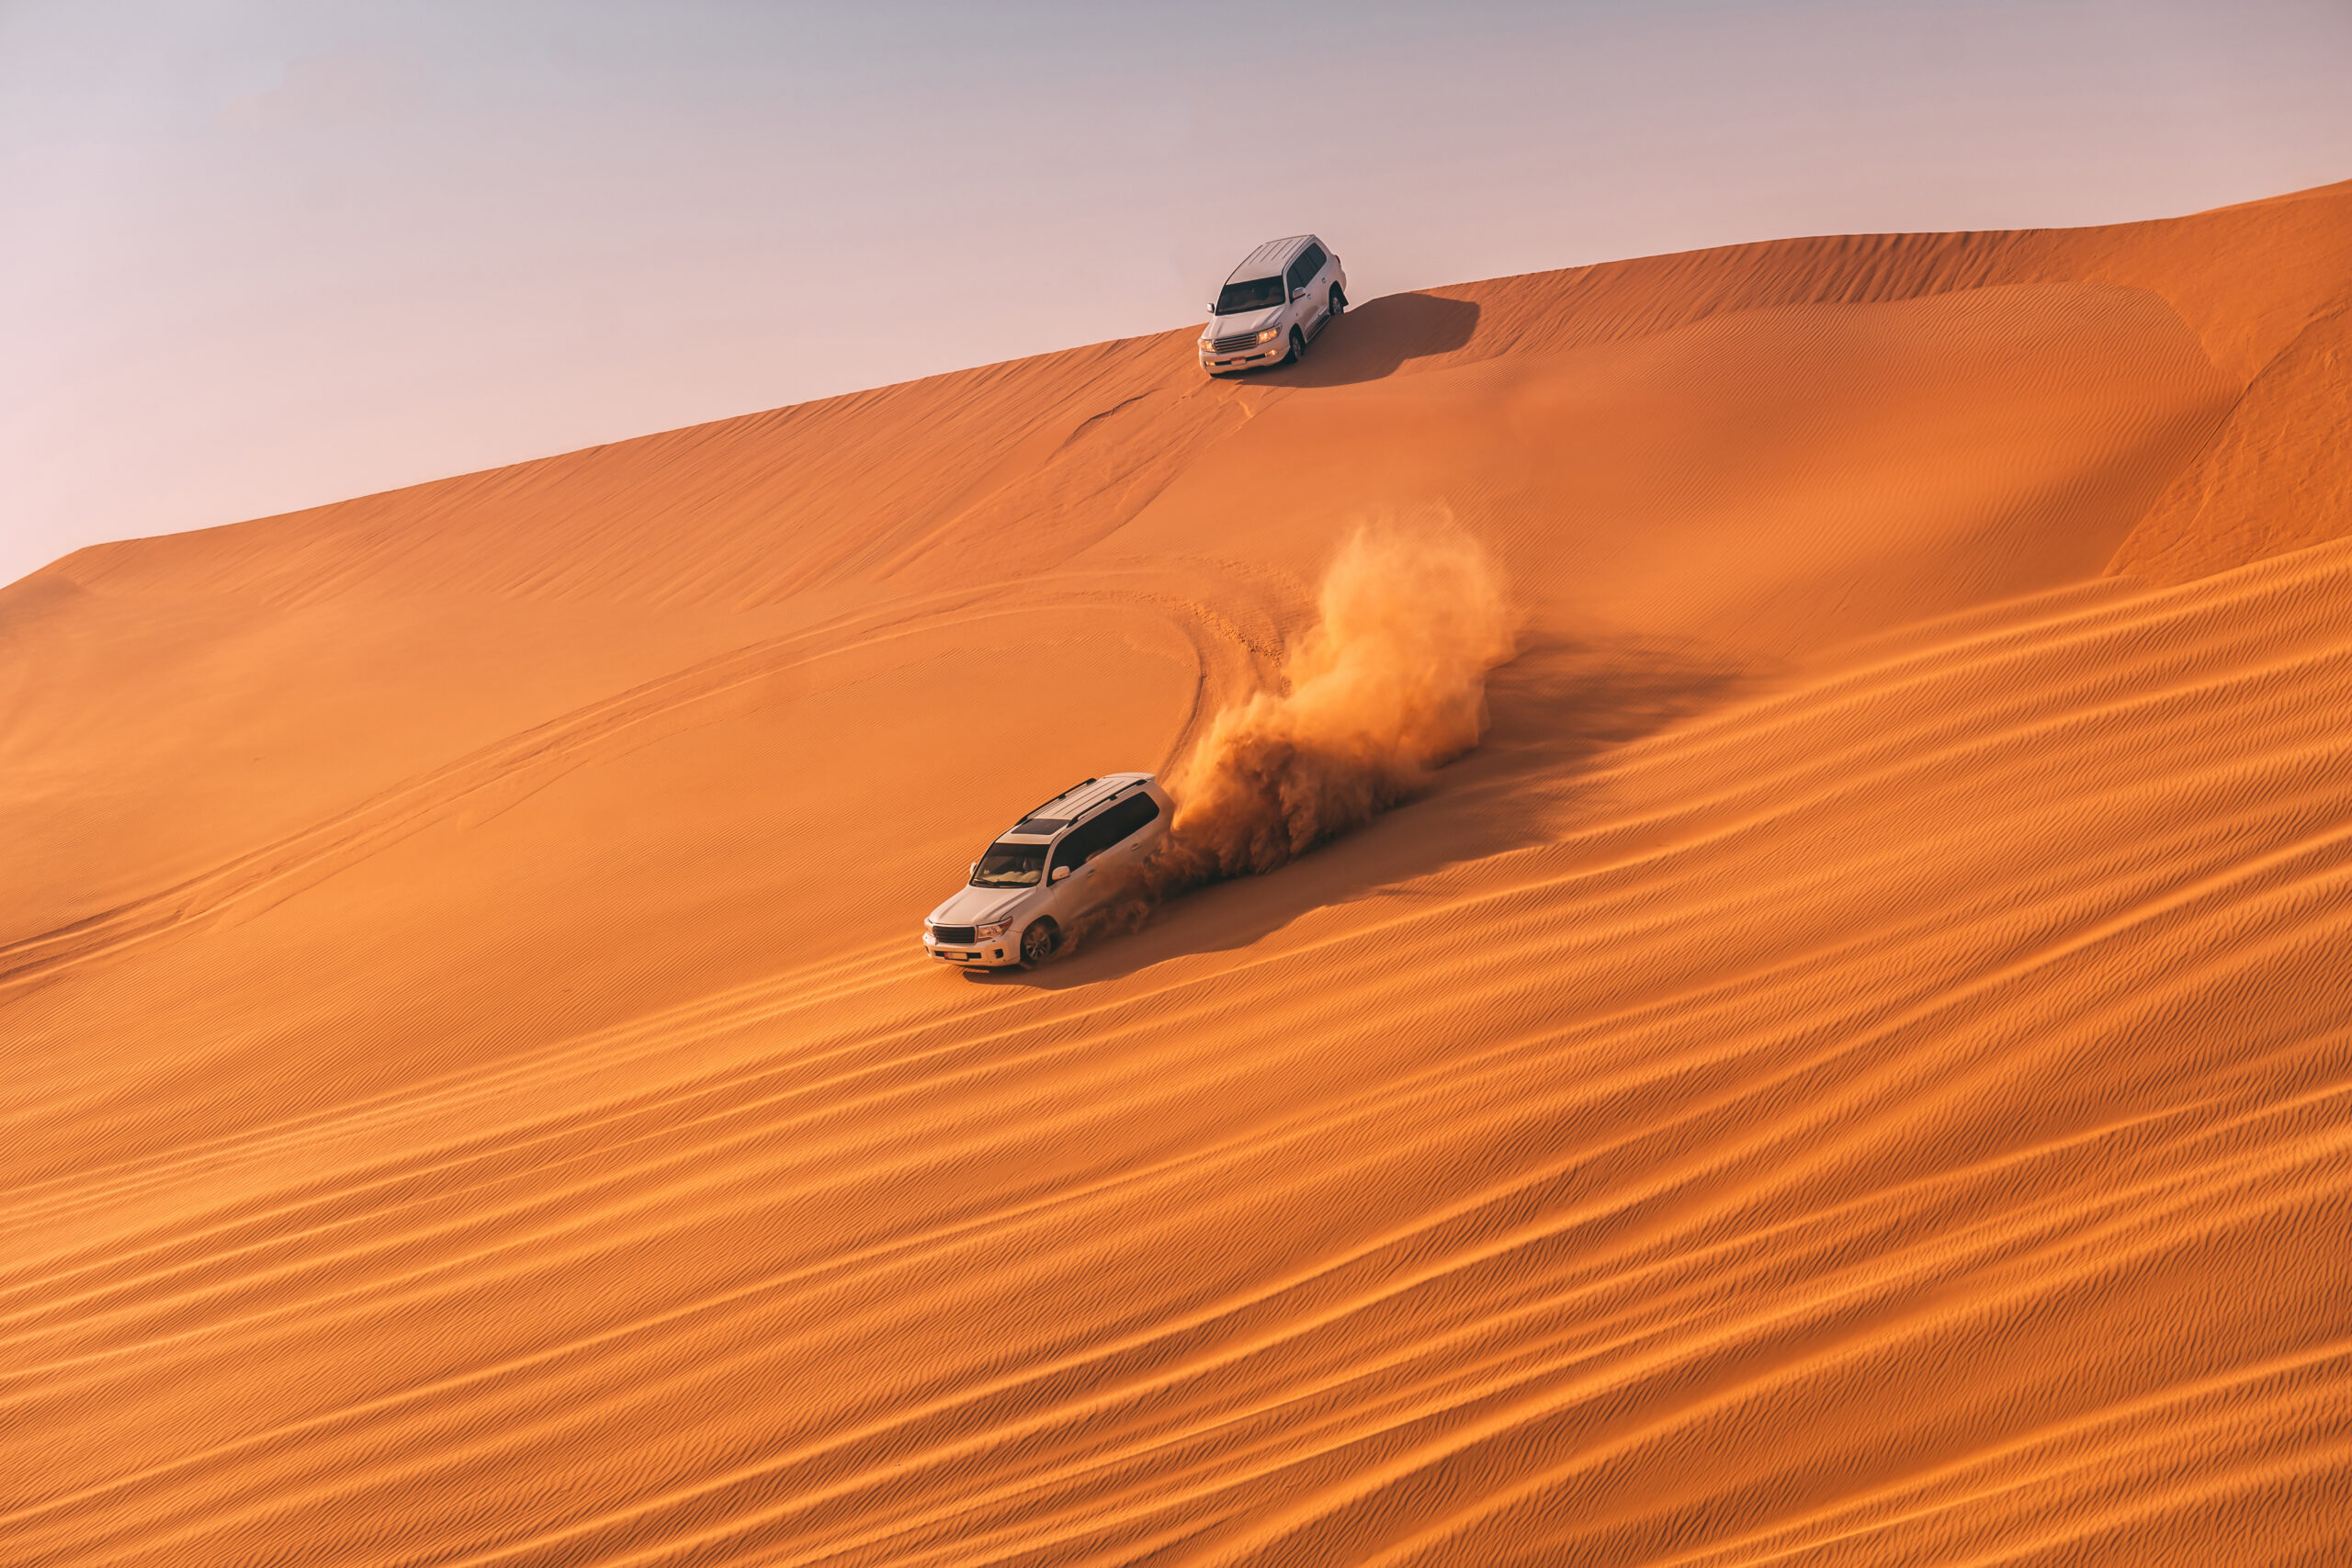 Best Dubai desert safari - Dune bashing